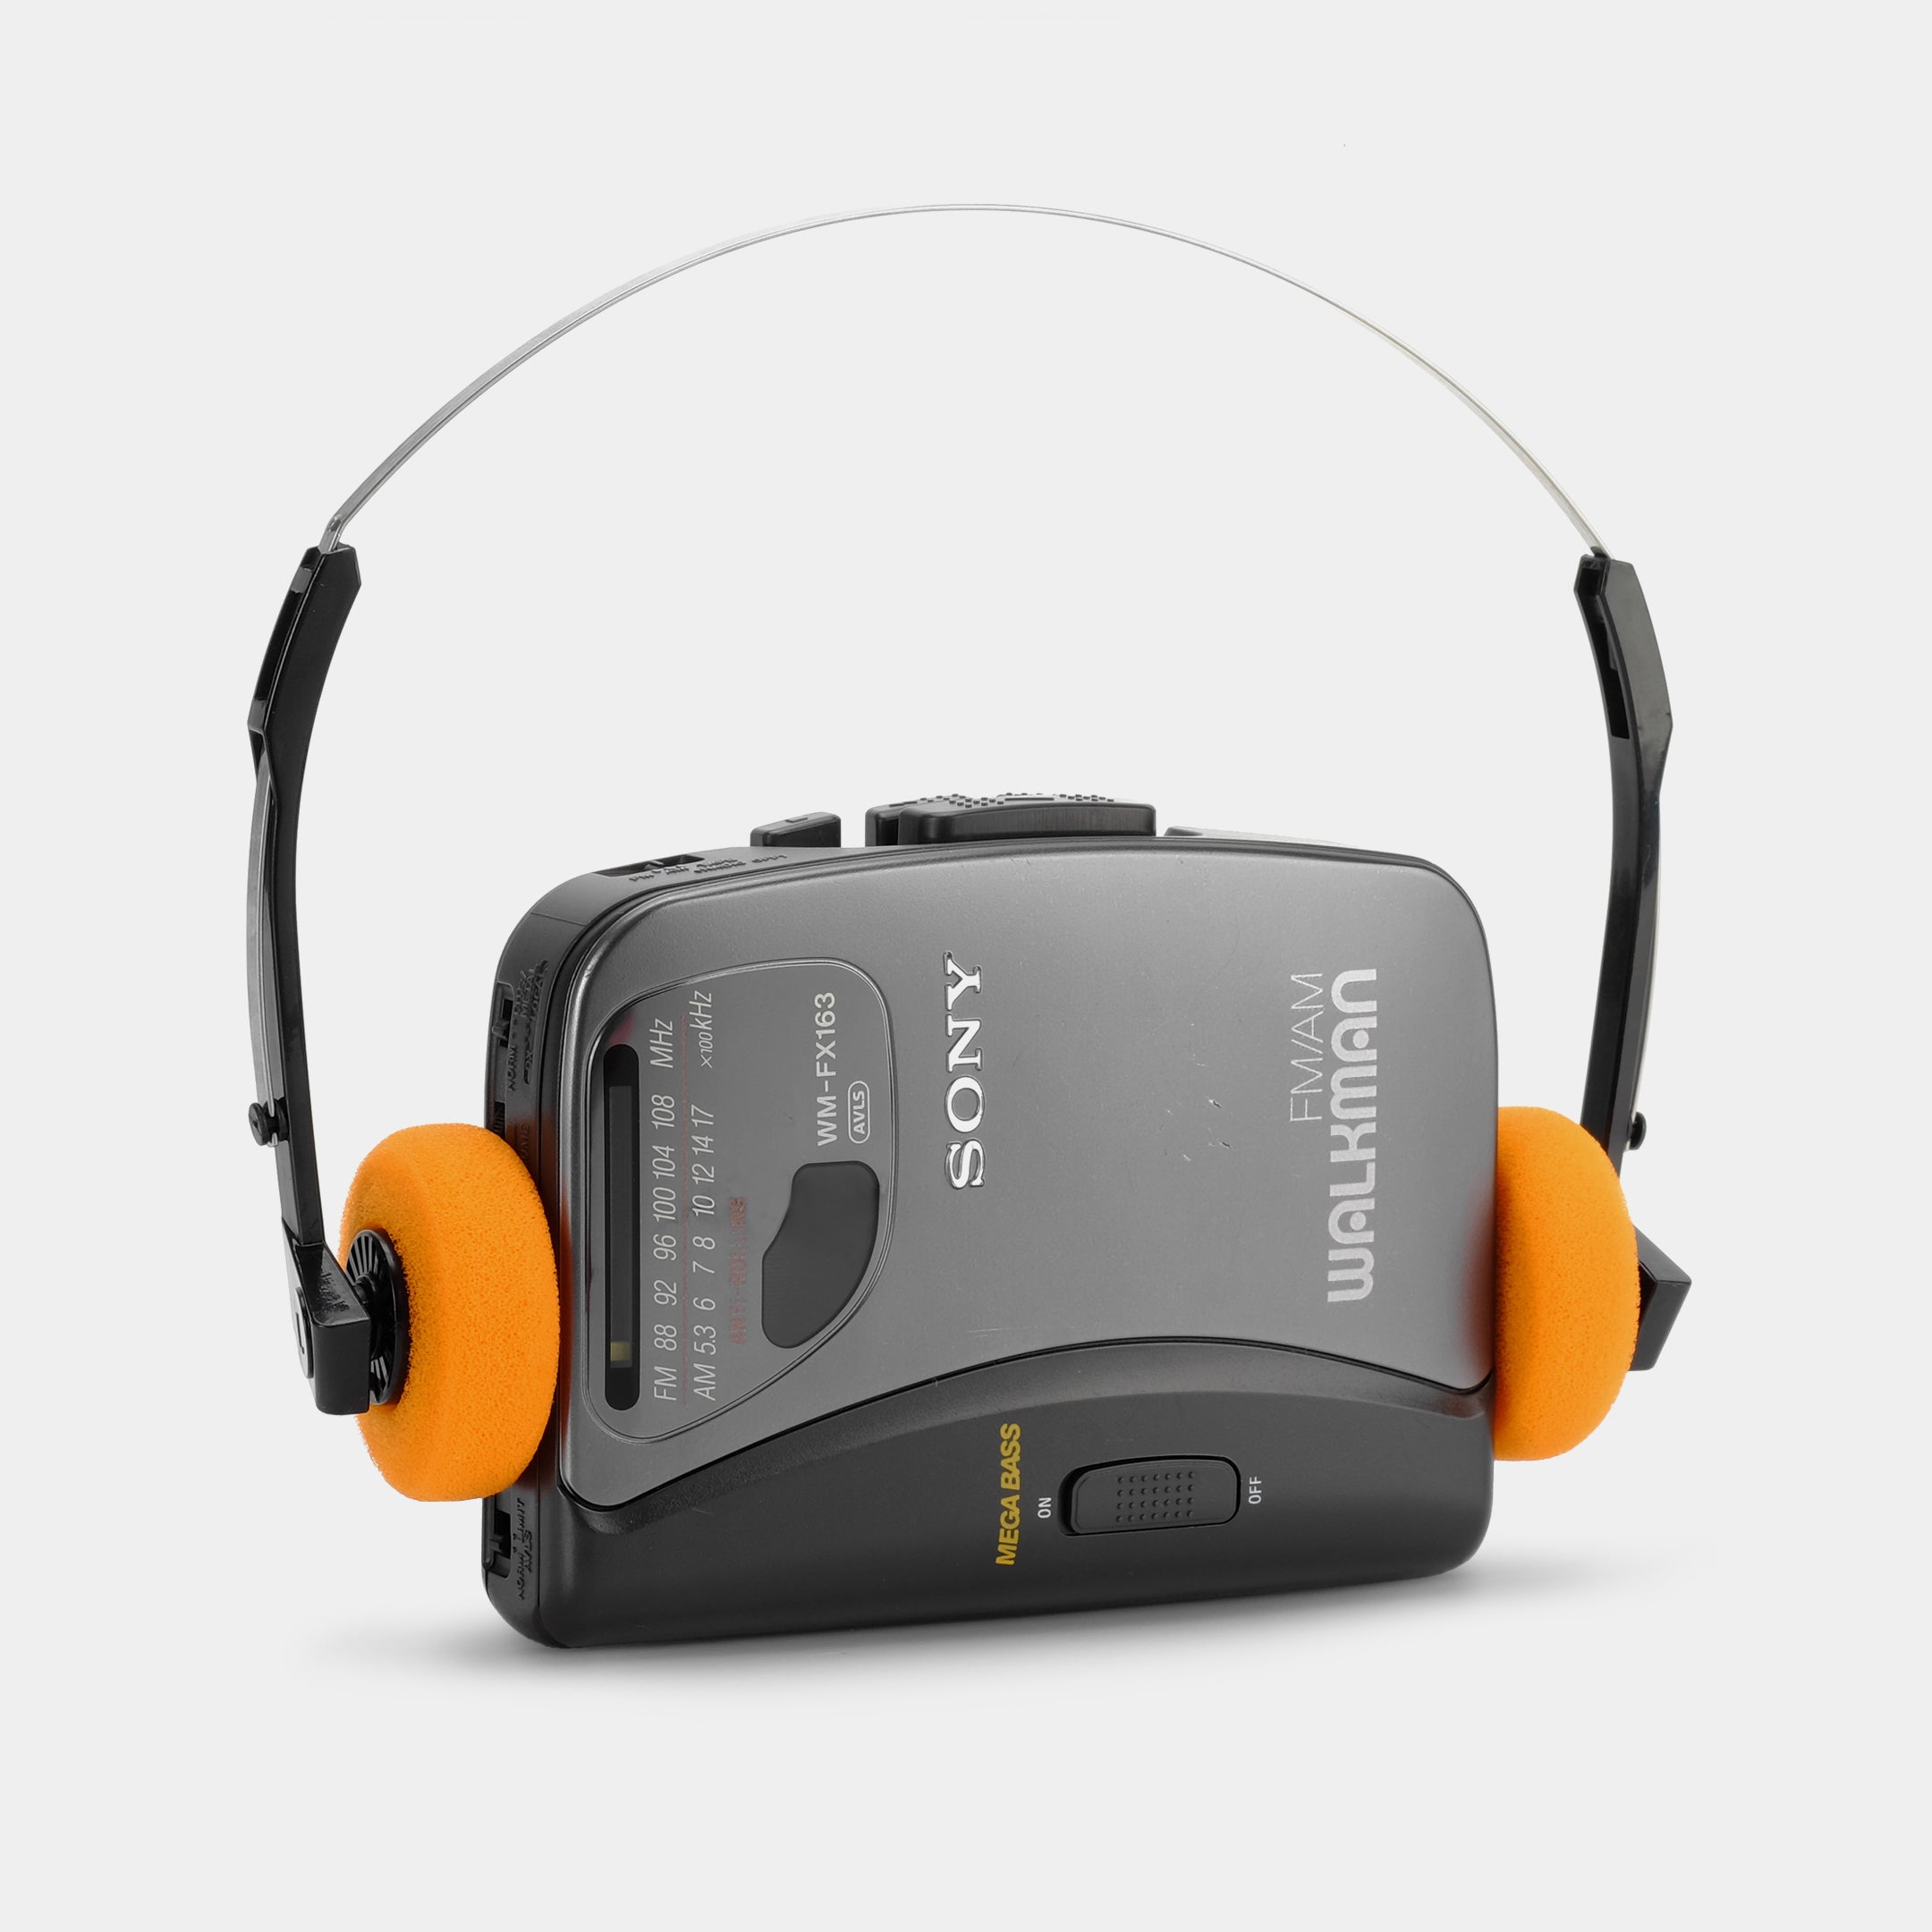 Sony Walkman WM-FX163 AM/FM Portable Cassette Player